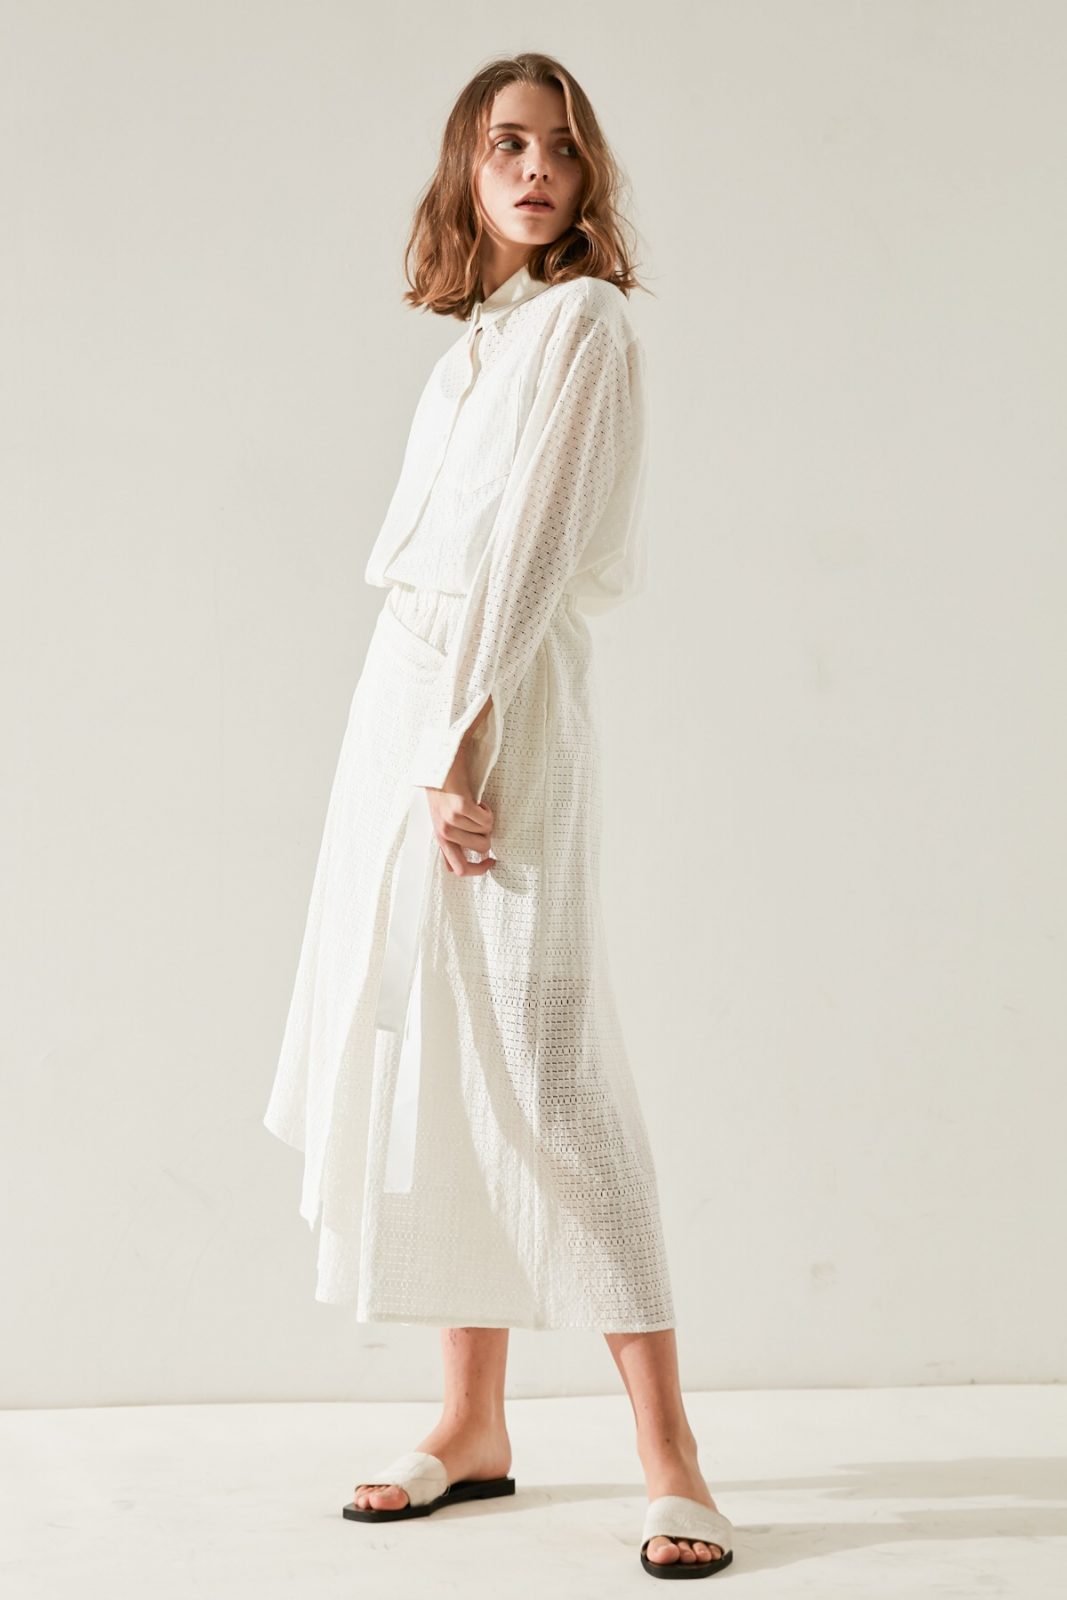 SKYE minimalist women fashion Aria cuolettes lace white